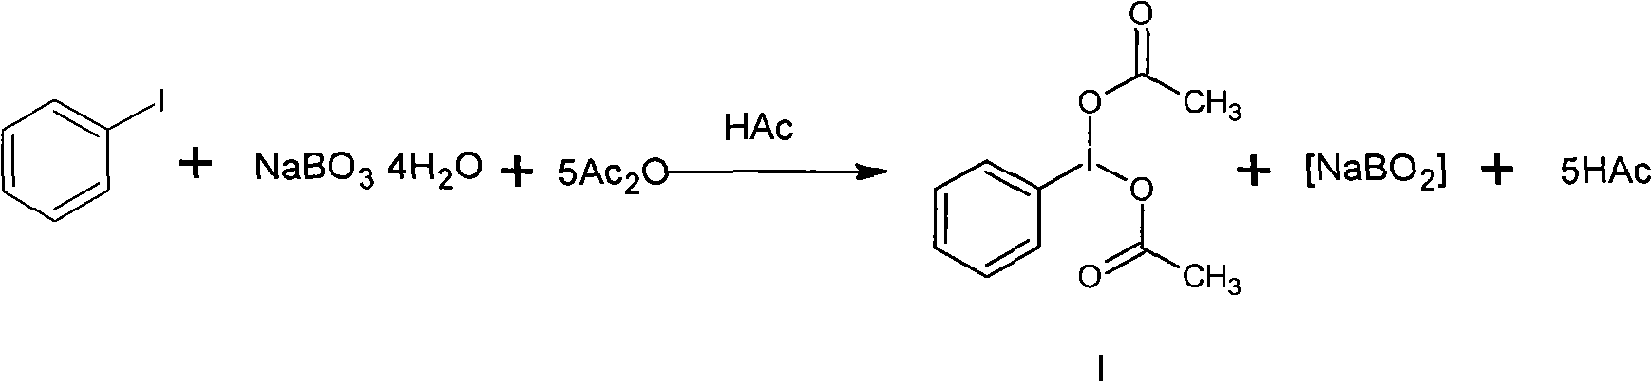 Method for preparing iodobenzene diacetate